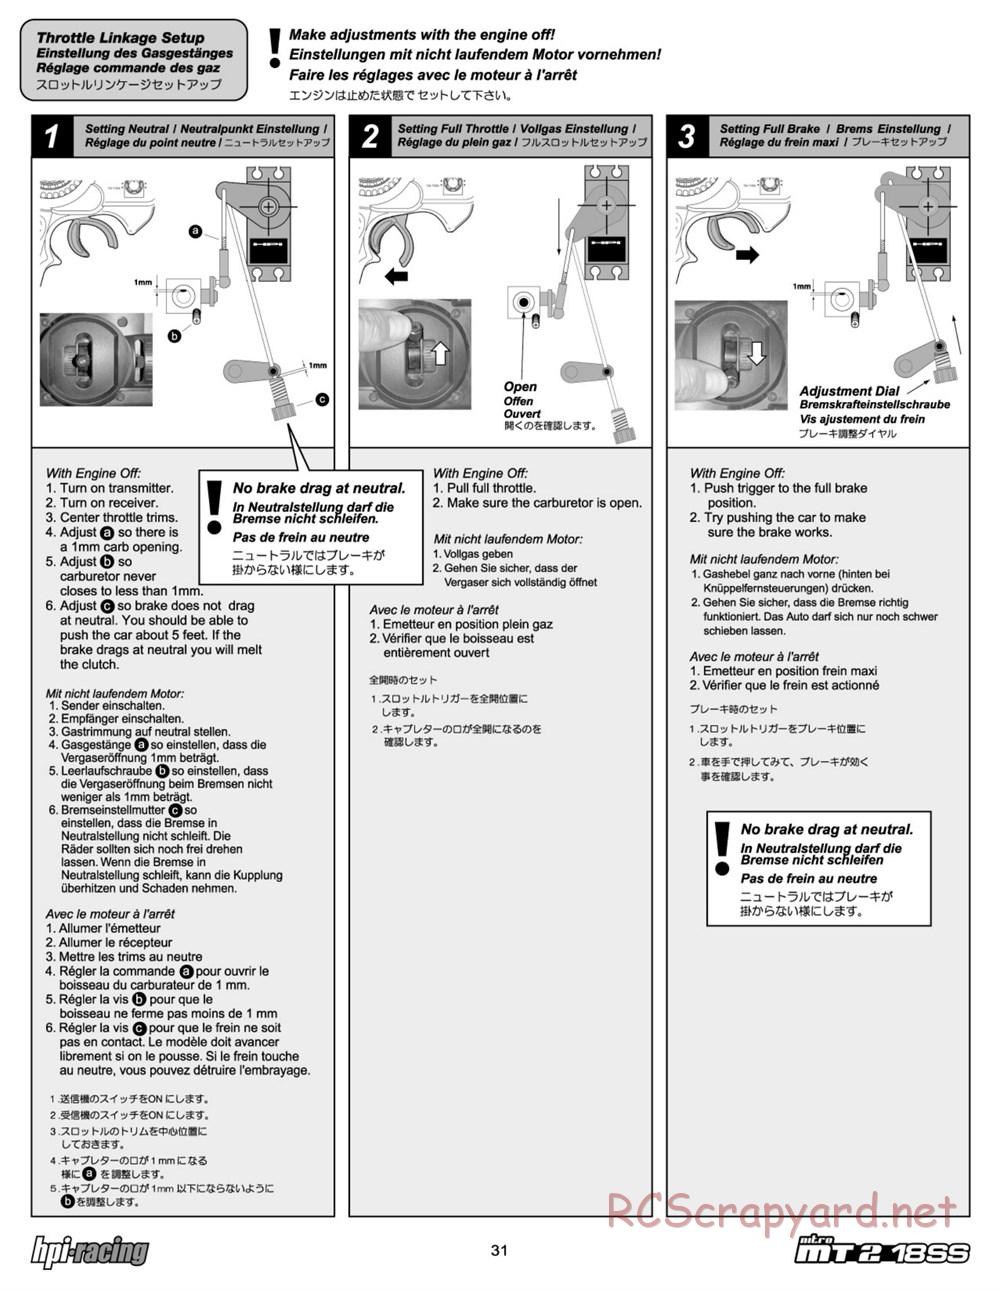 HPI - Nitro MT2 18SS - Manual - Page 31